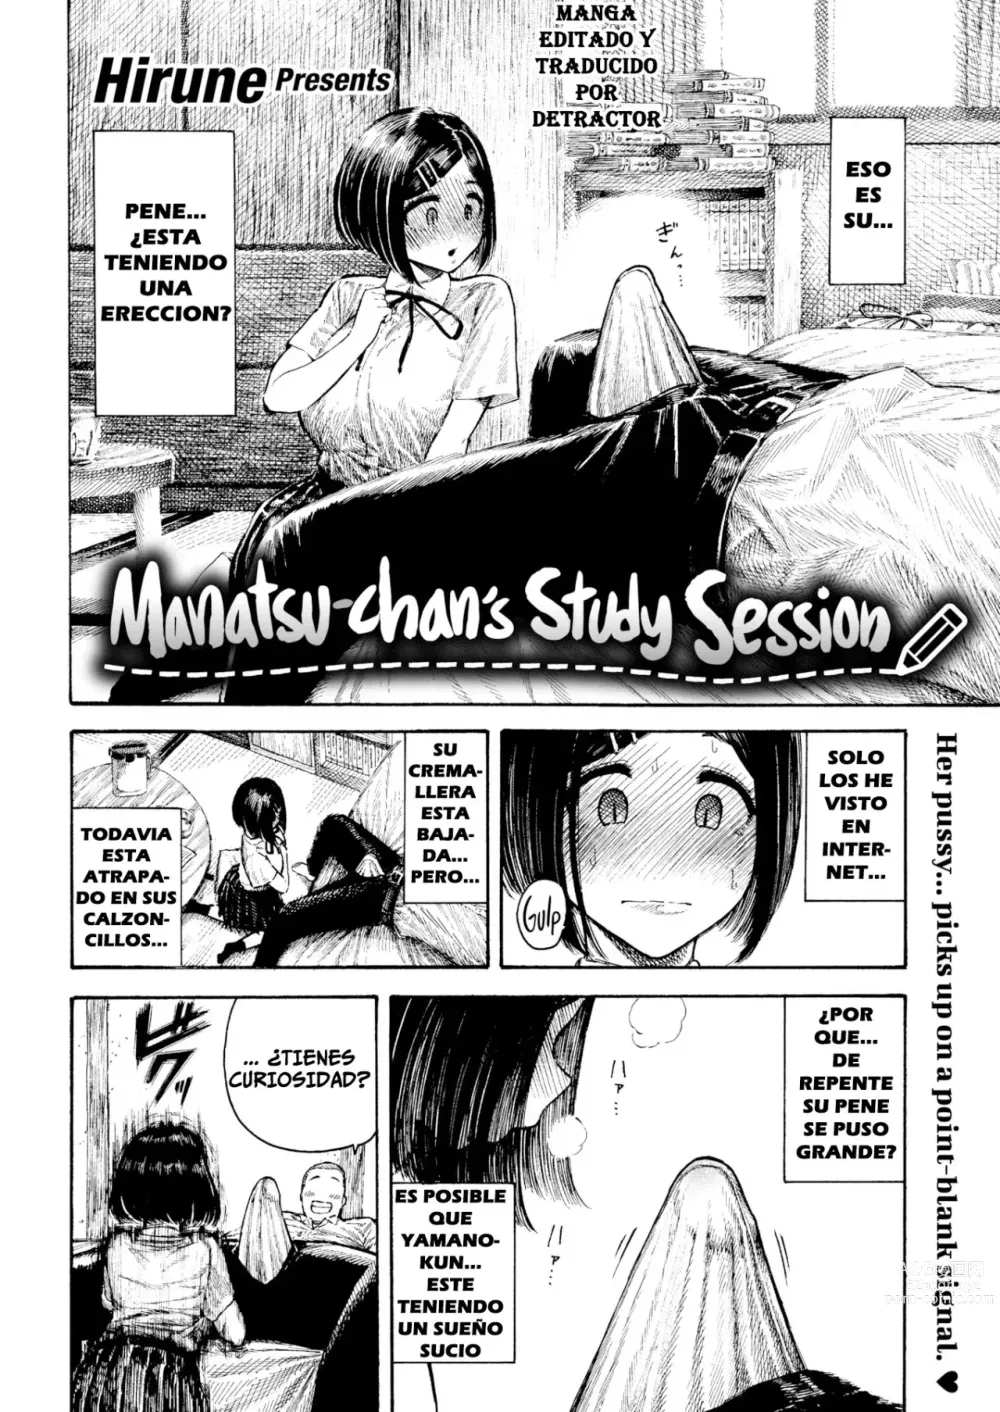 Page 6 of doujinshi Manatsu-chans Study Session